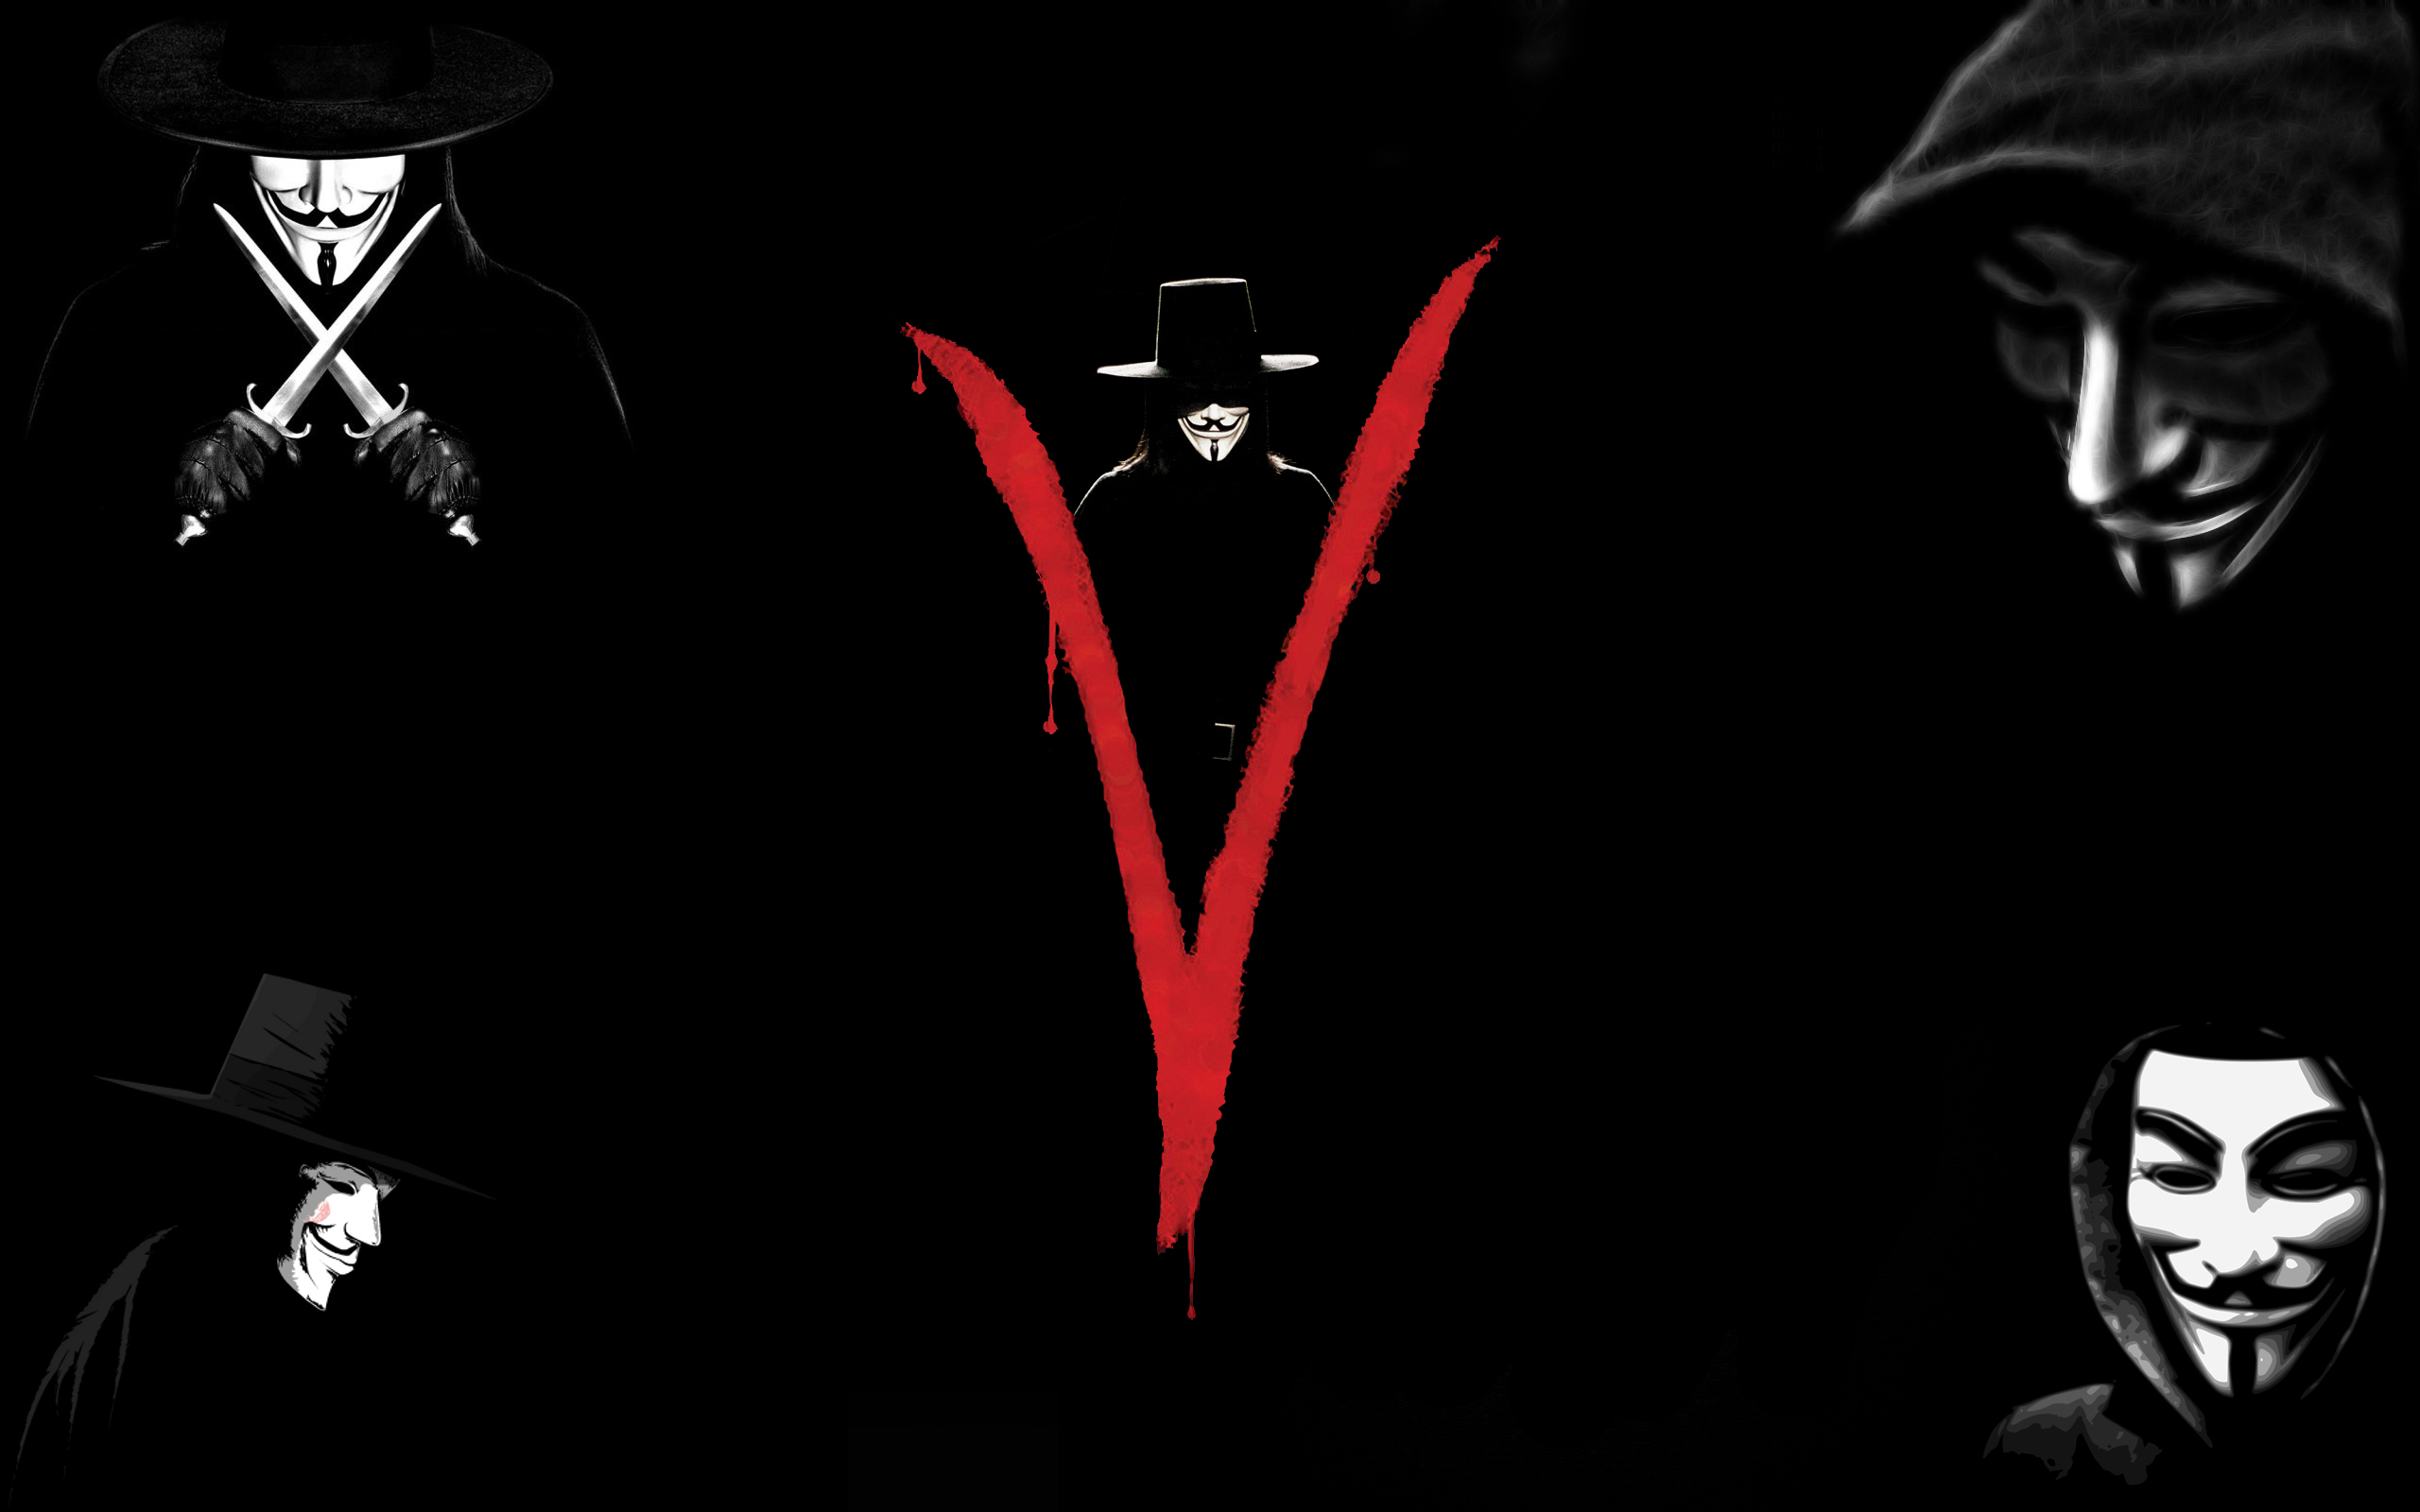 v for vendetta wallpaper widescreen